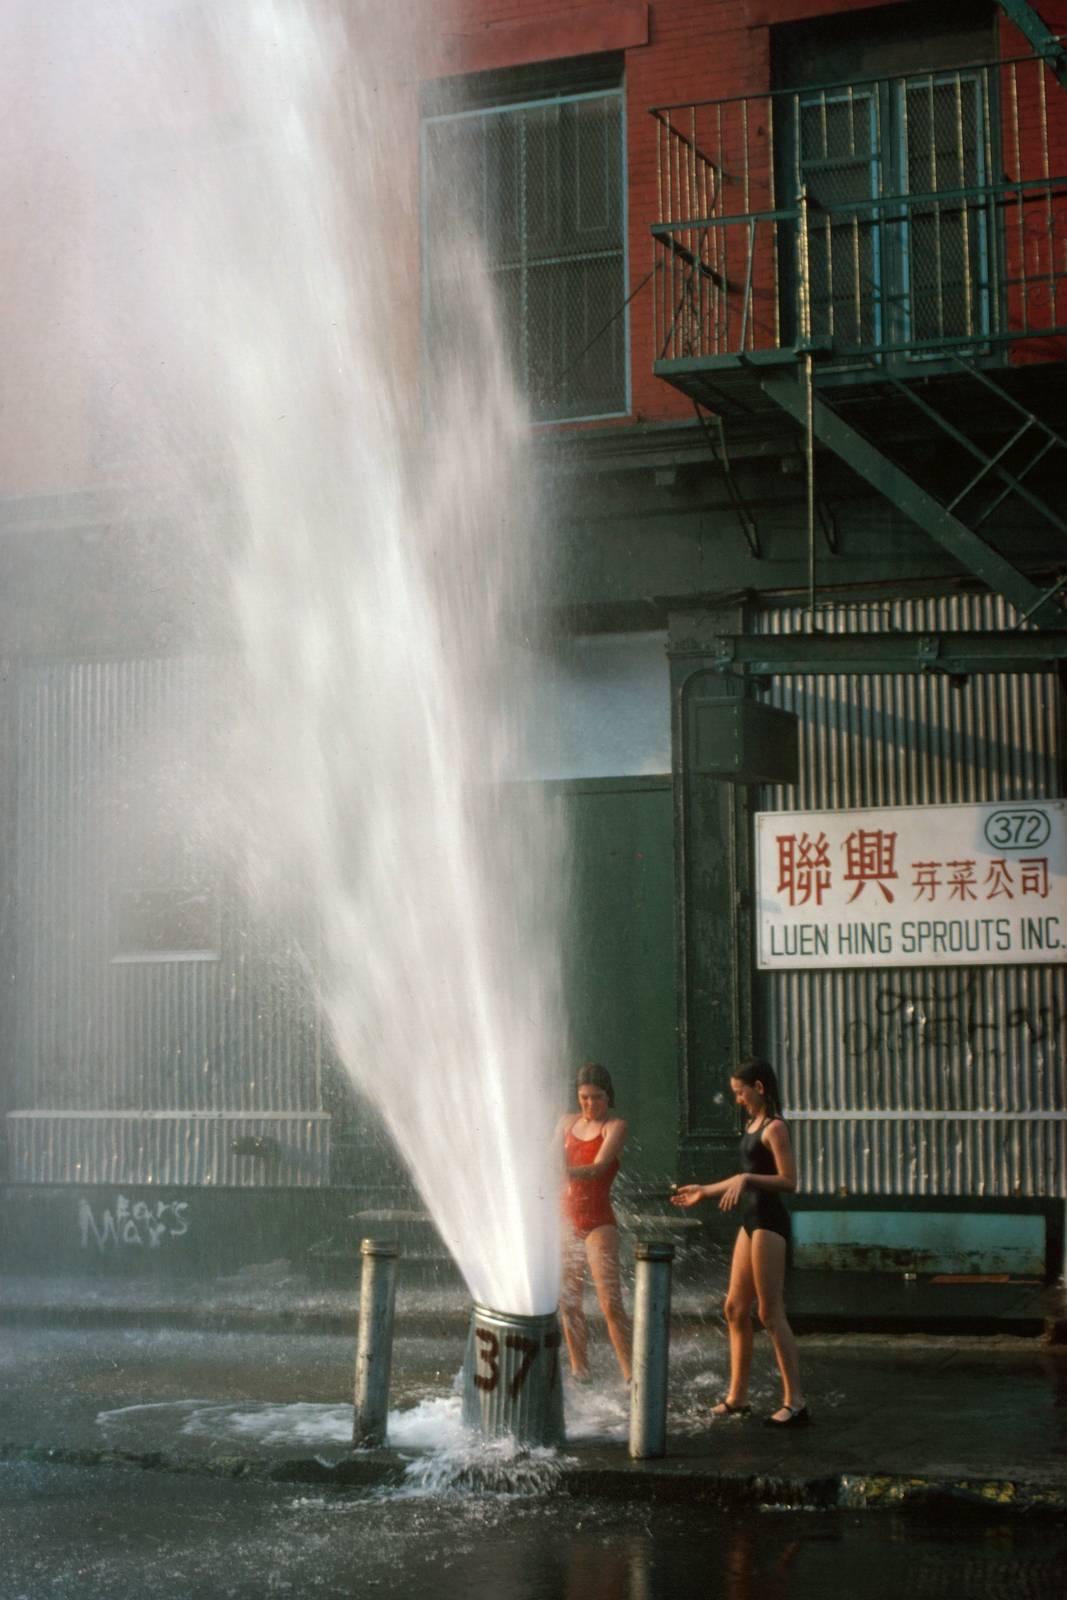 Robert Herman Color Photograph - Broome Street New York City Summer 1980 (Soho)